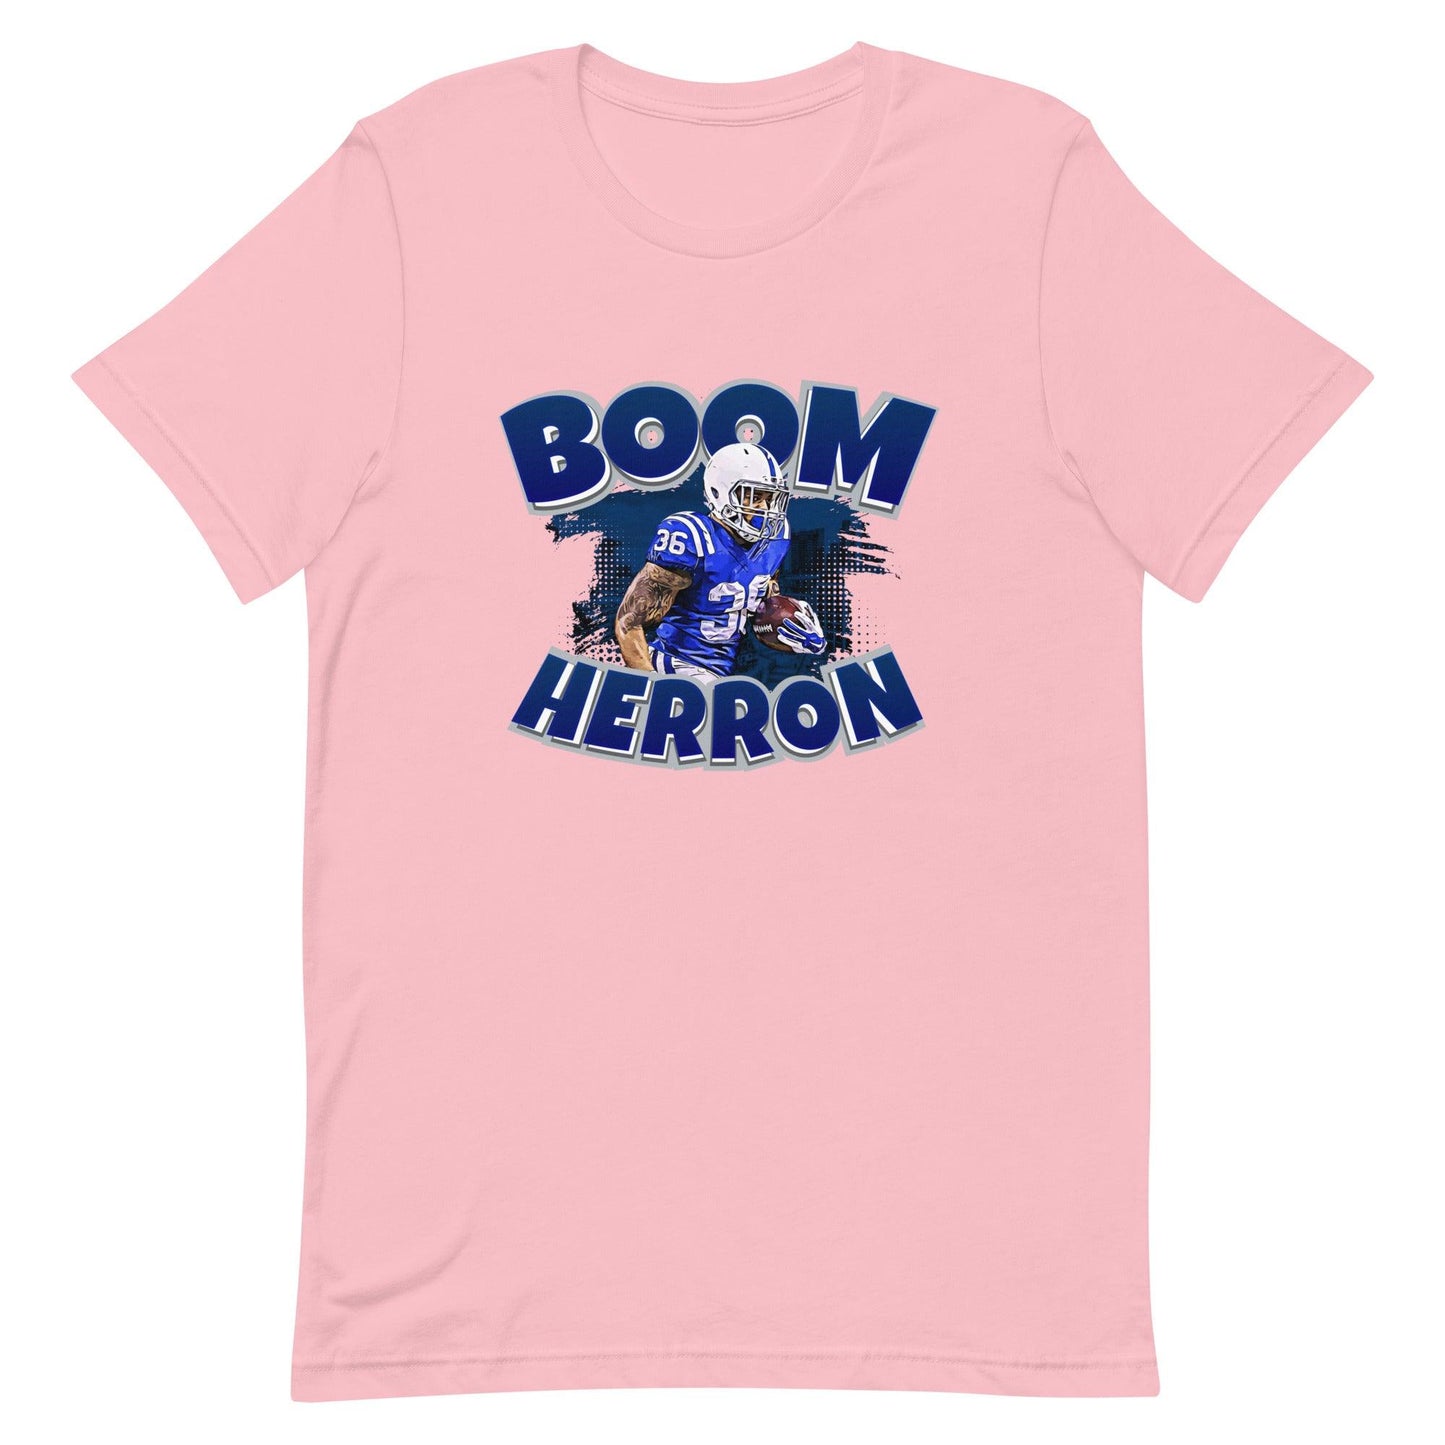 Boom Herron "Gameday" t-shirt - Fan Arch